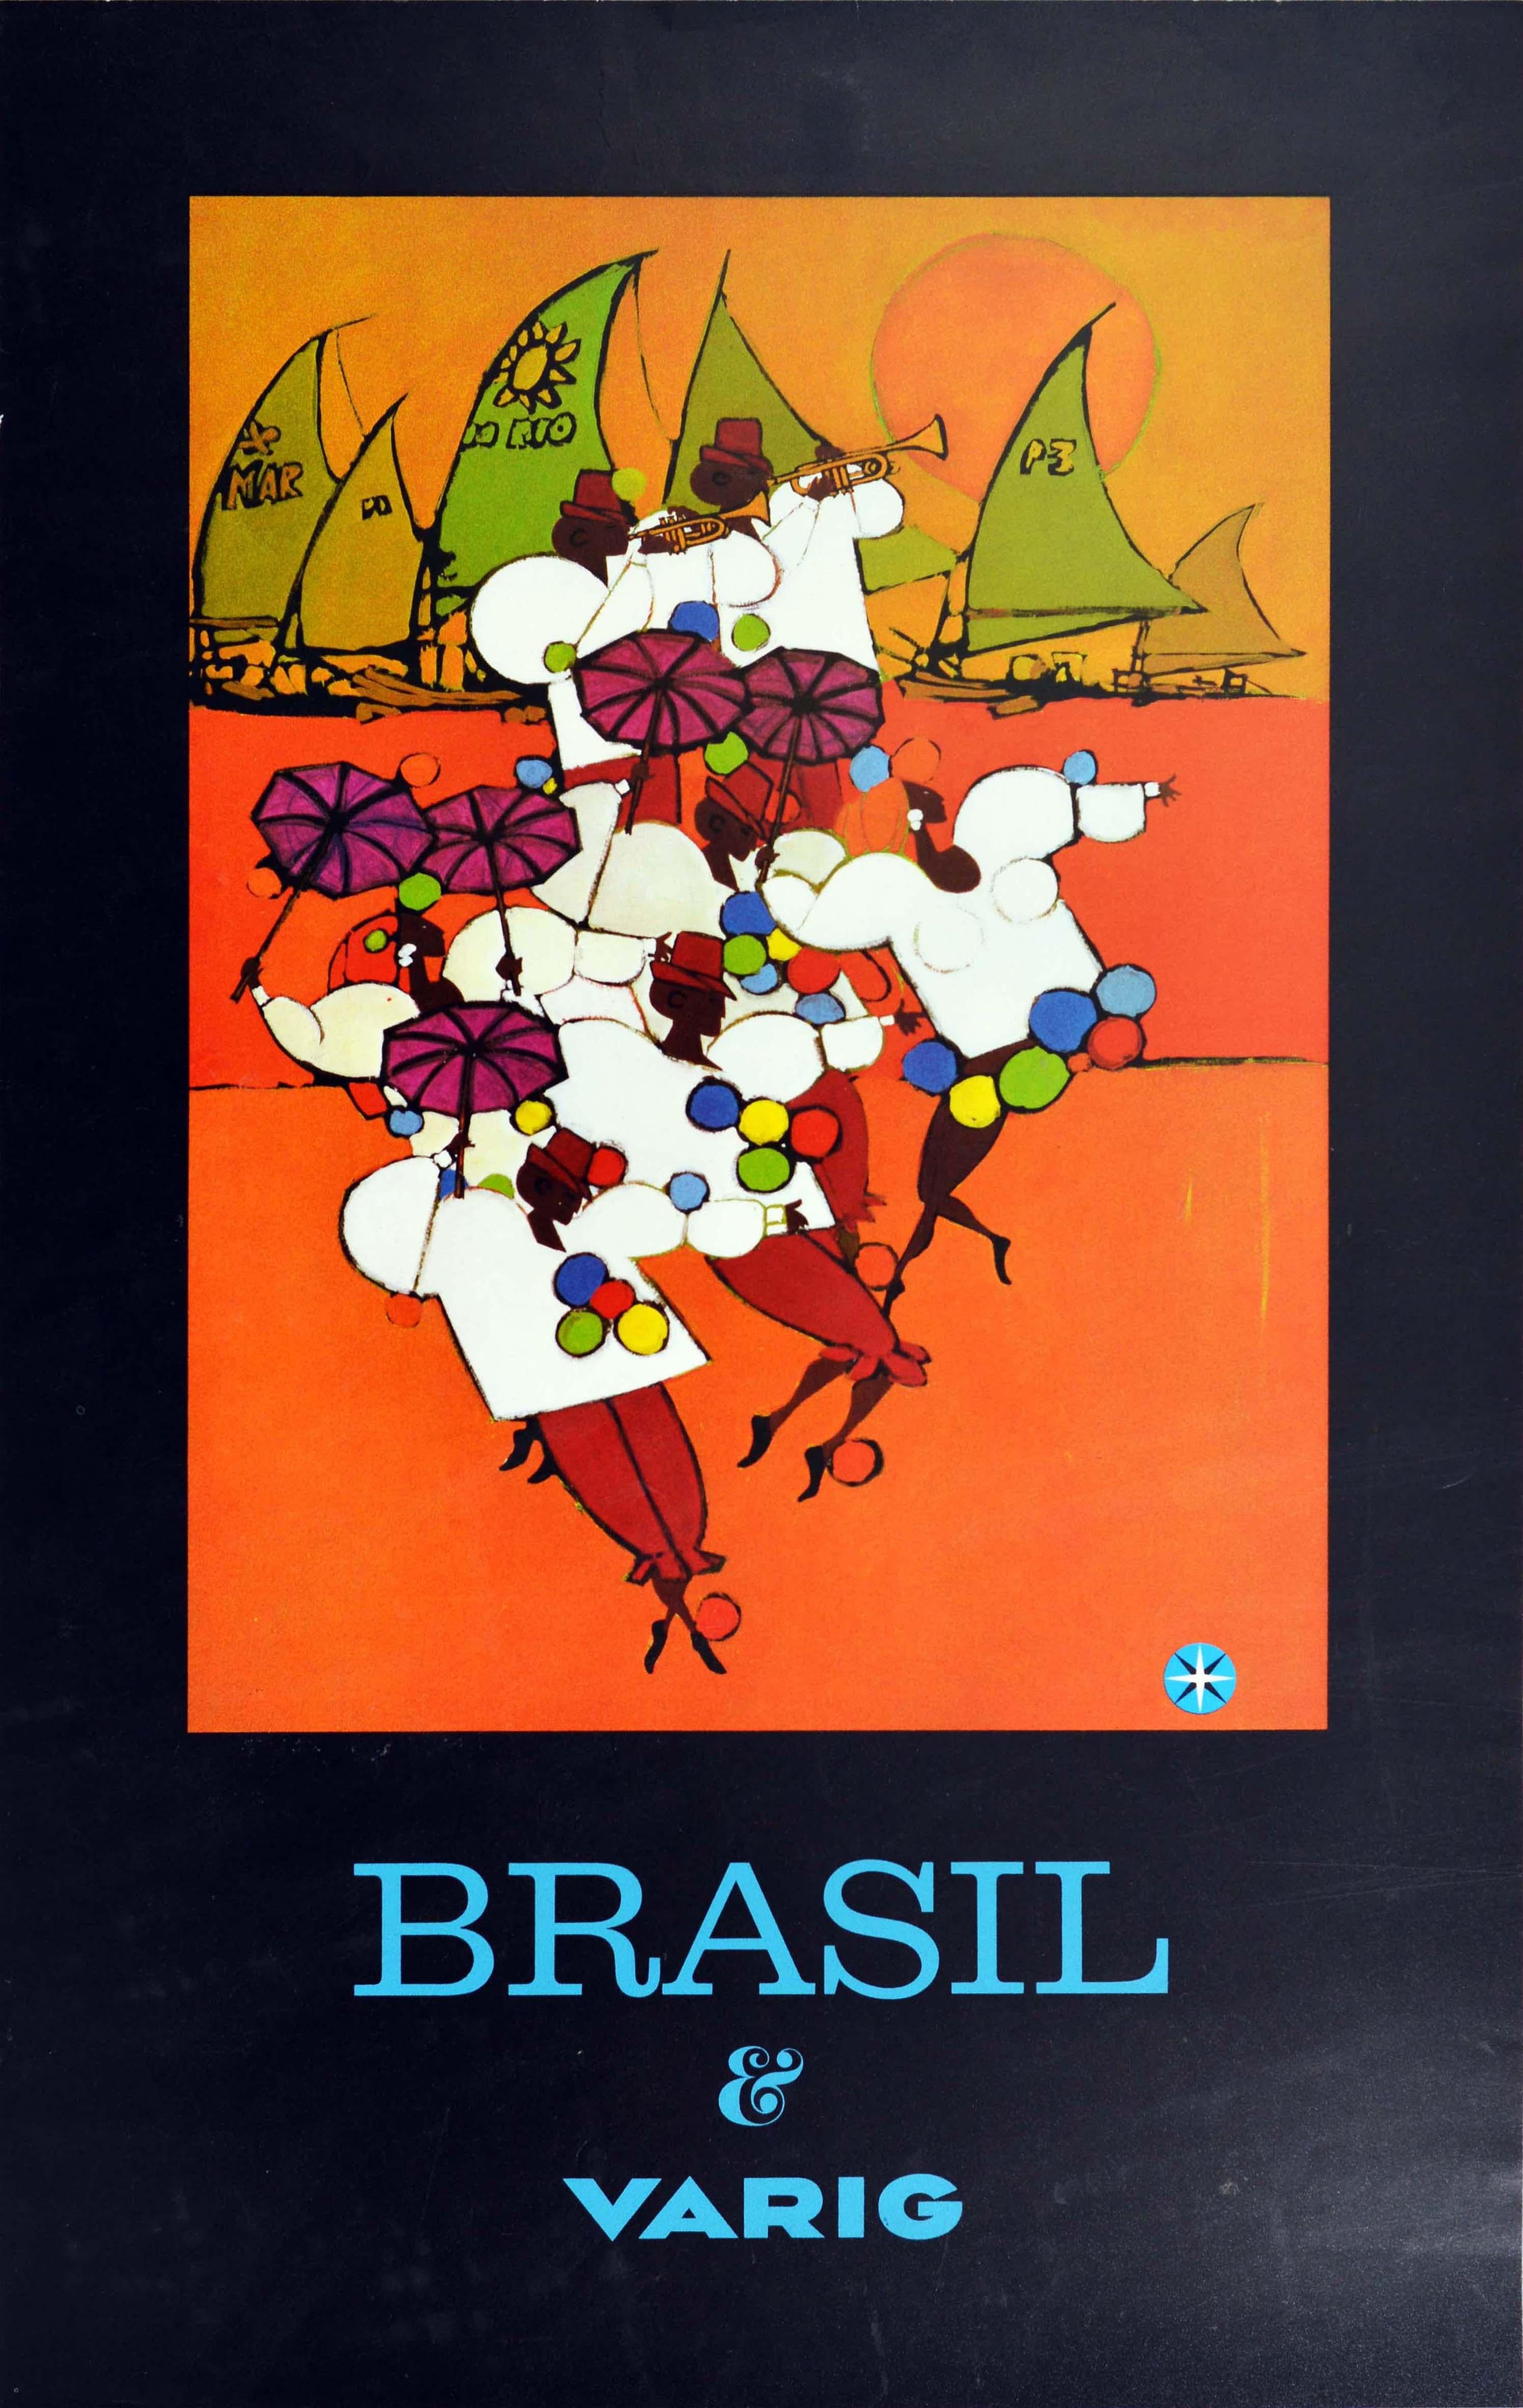 Nelson Jungbluth Print - Original Vintage Travel Poster Brazil Brasil Varig Rio Carnival Frevo Capoeira